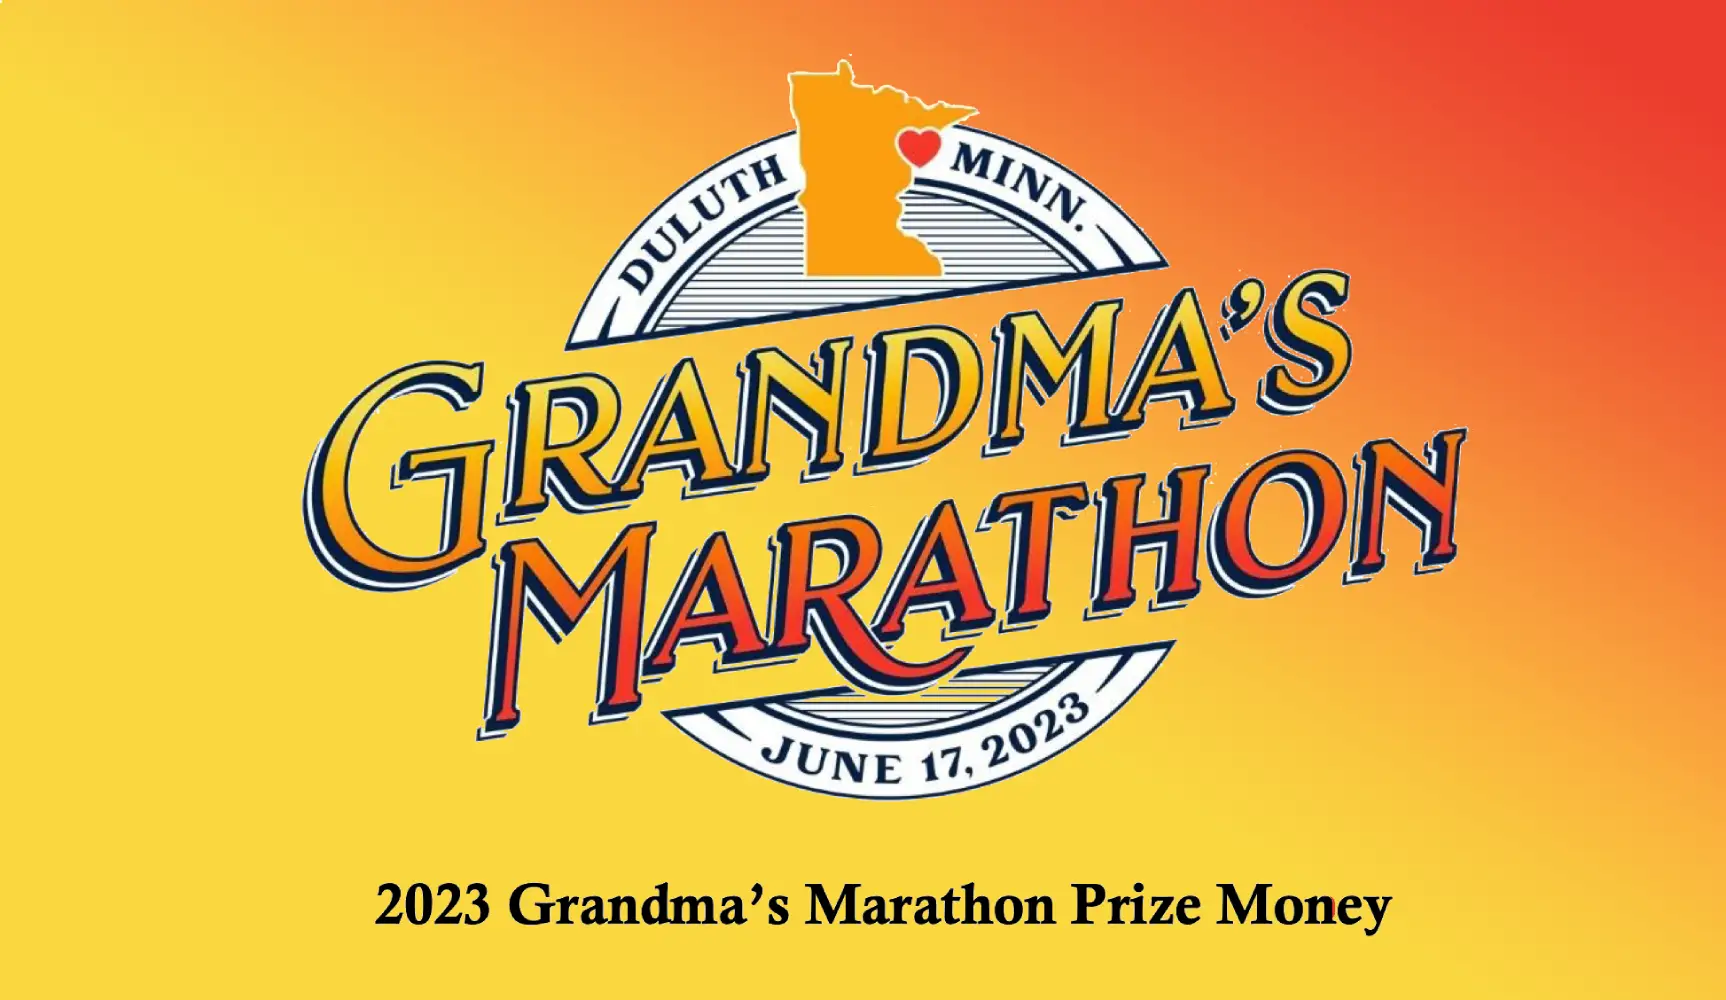 What is the 2023 Grandma's Marathon Prize Money?